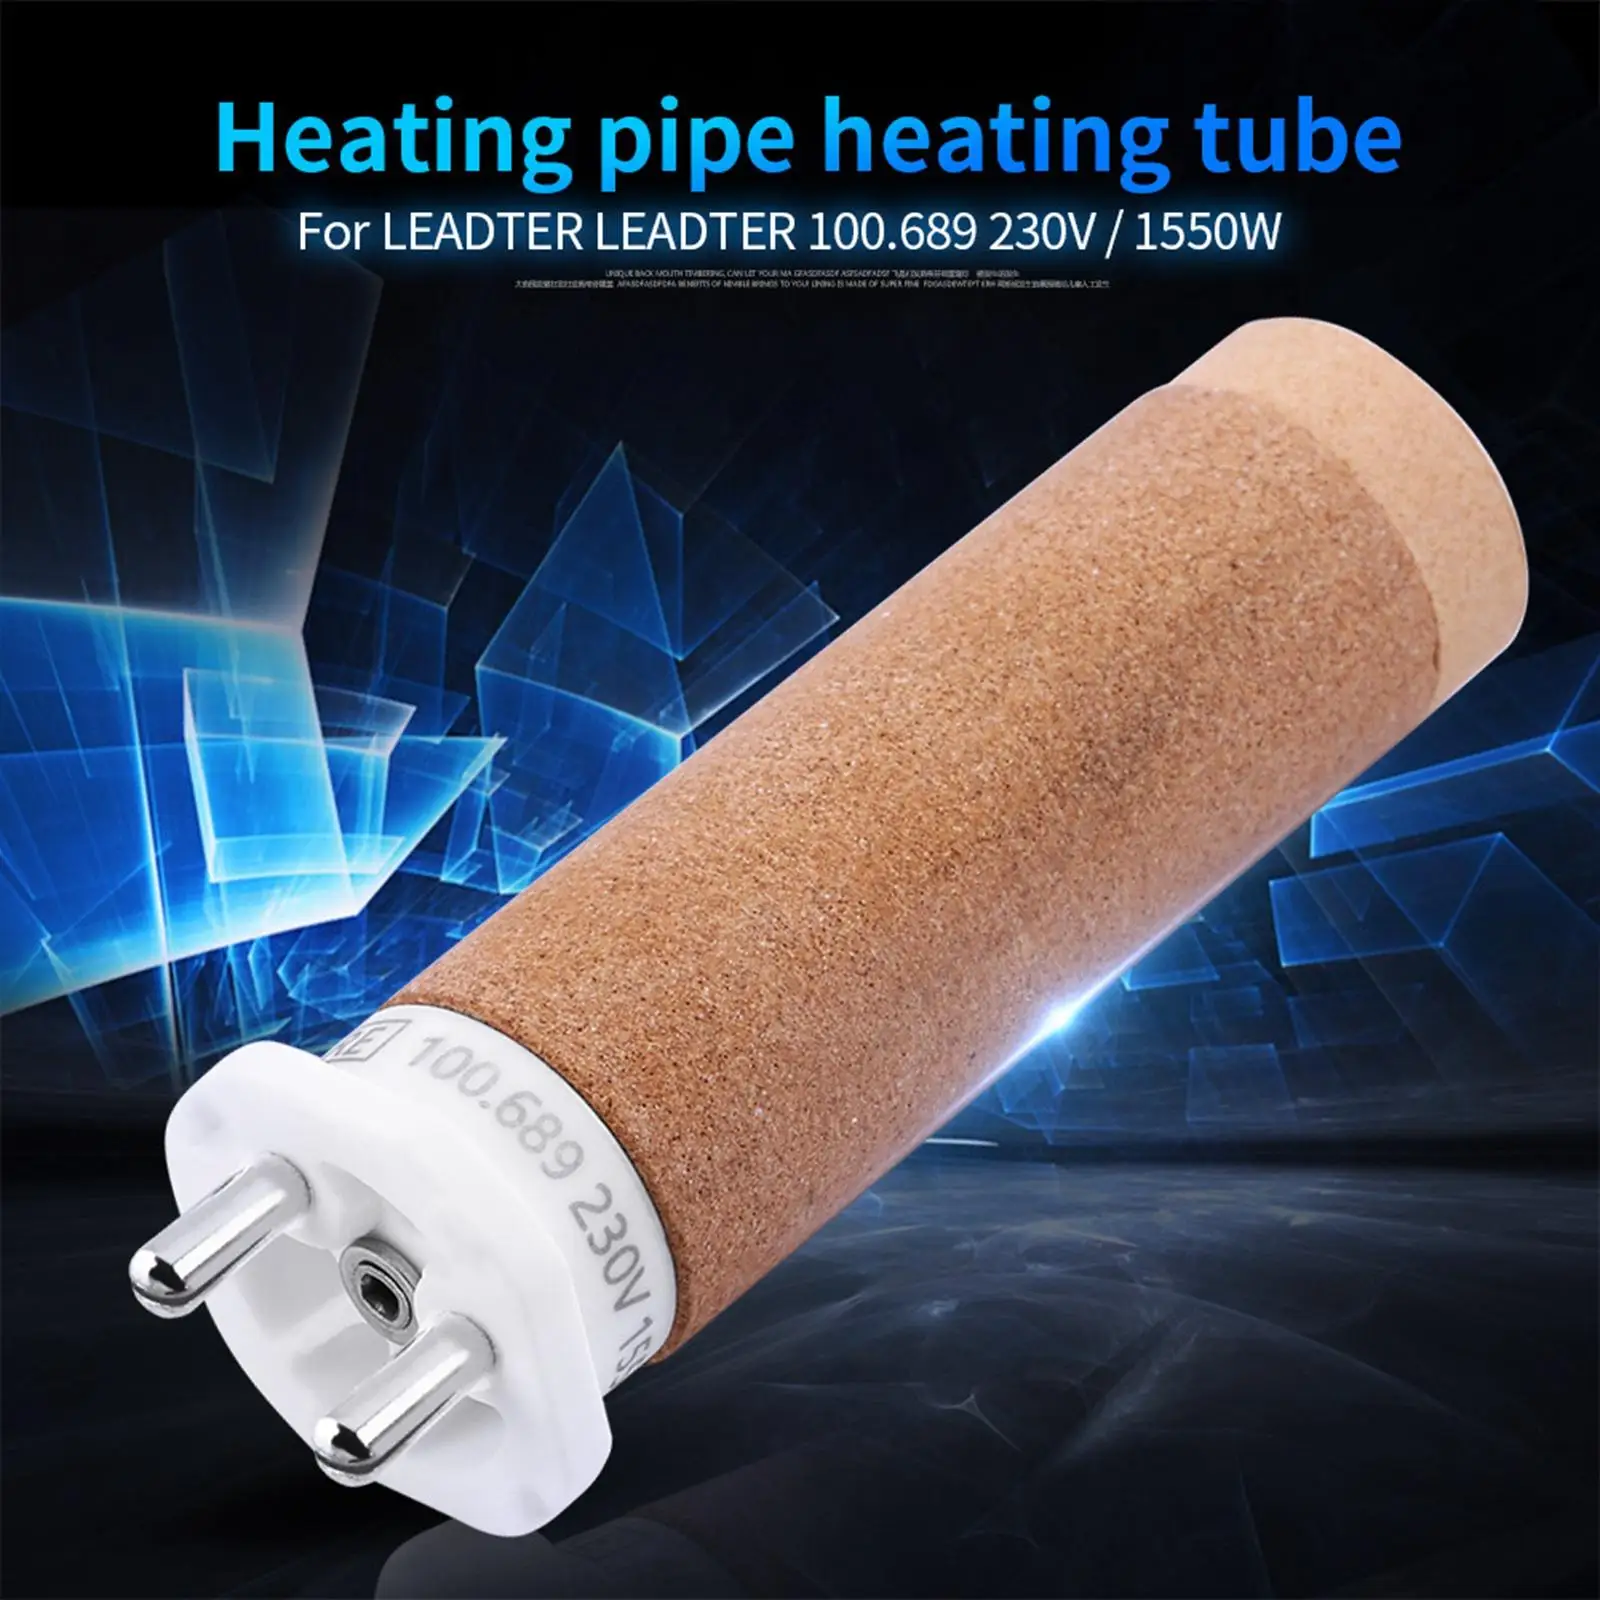 Ceramic Heating Element 230V 1550W 100.689 26mm Dia Heating Core for Handheld Hot Air Plastic Welder Gun Engineering Food Drying